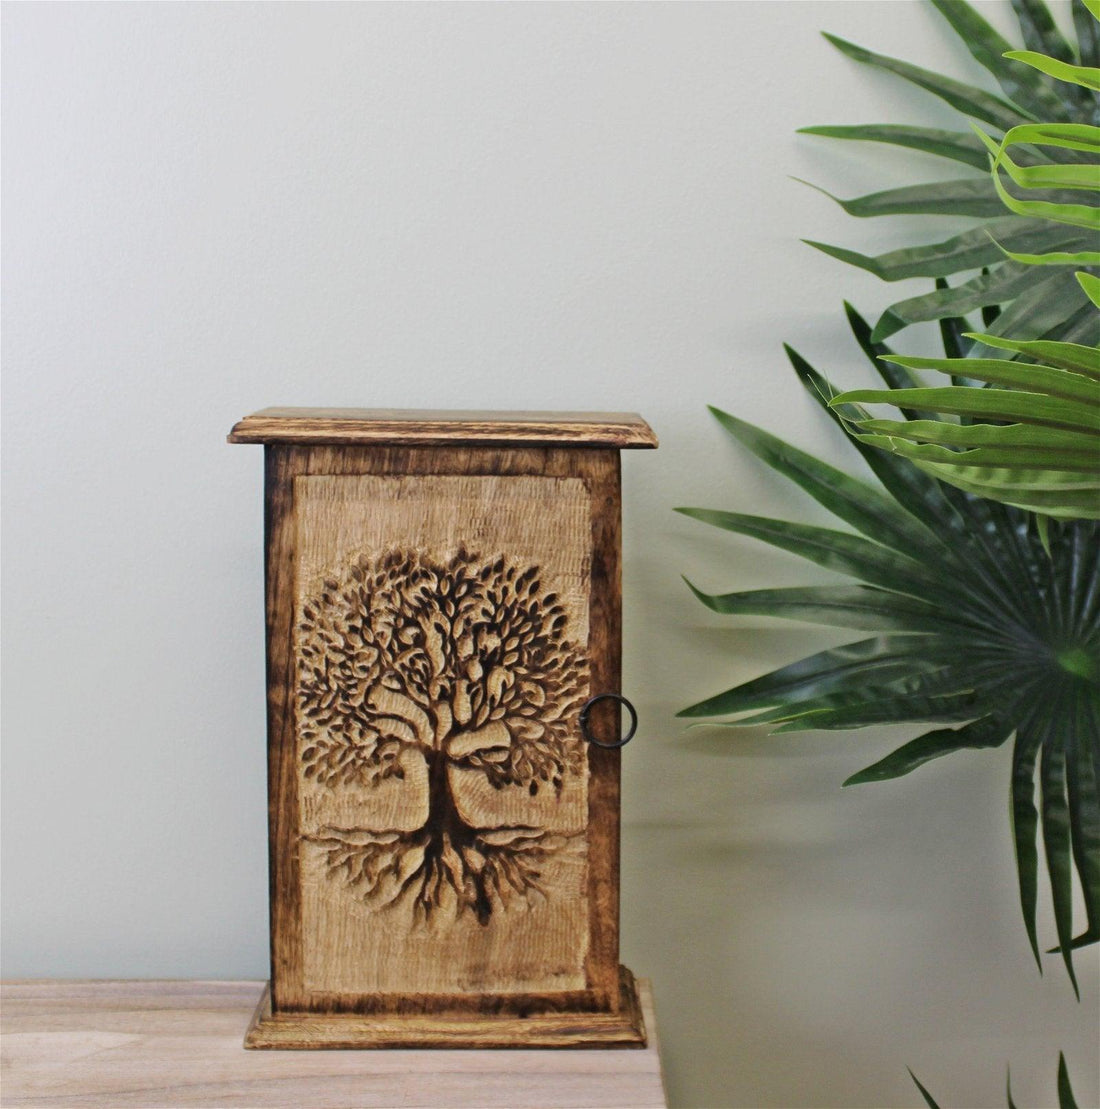 Tree of Life Hand Carved Key Box - £33.99 - Key Hooks & Boxes 